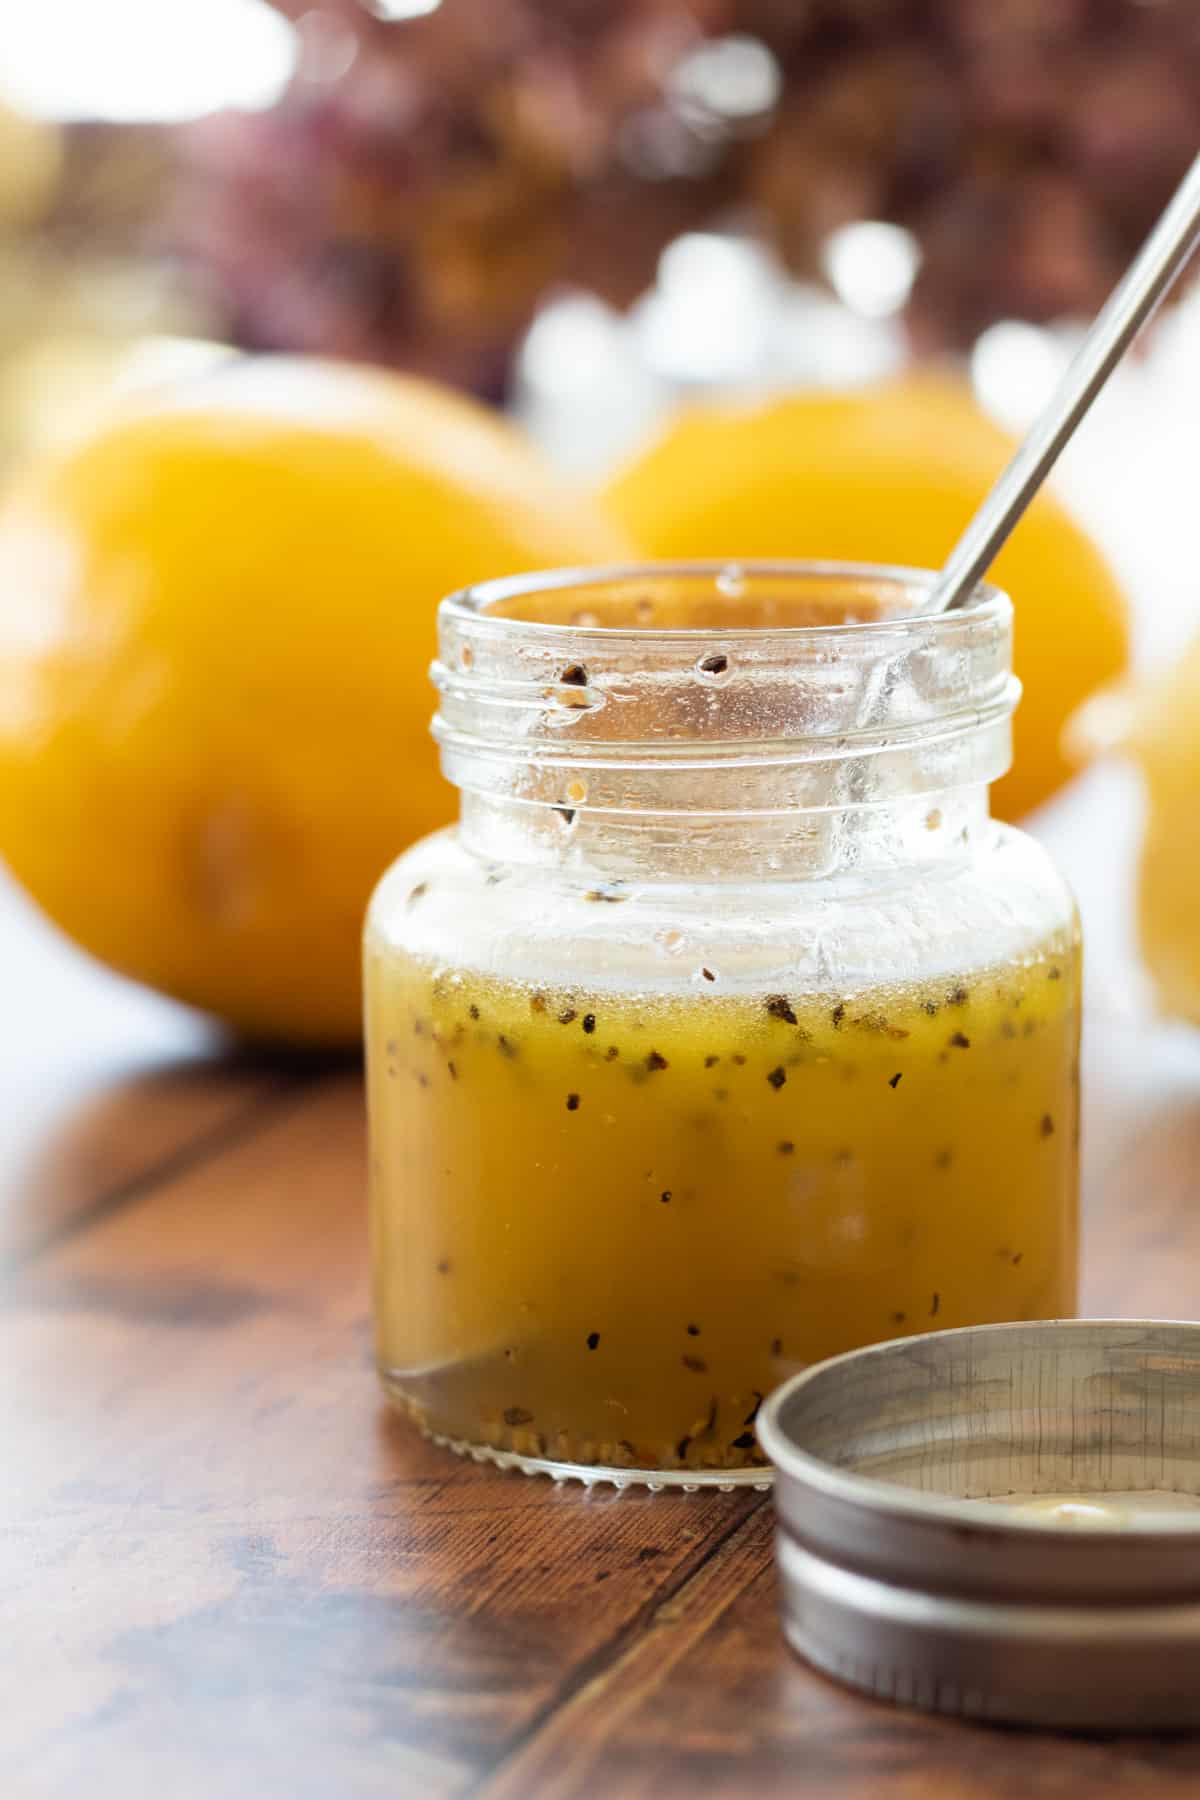 honey lemon vinaigrette in a jar with a spoon